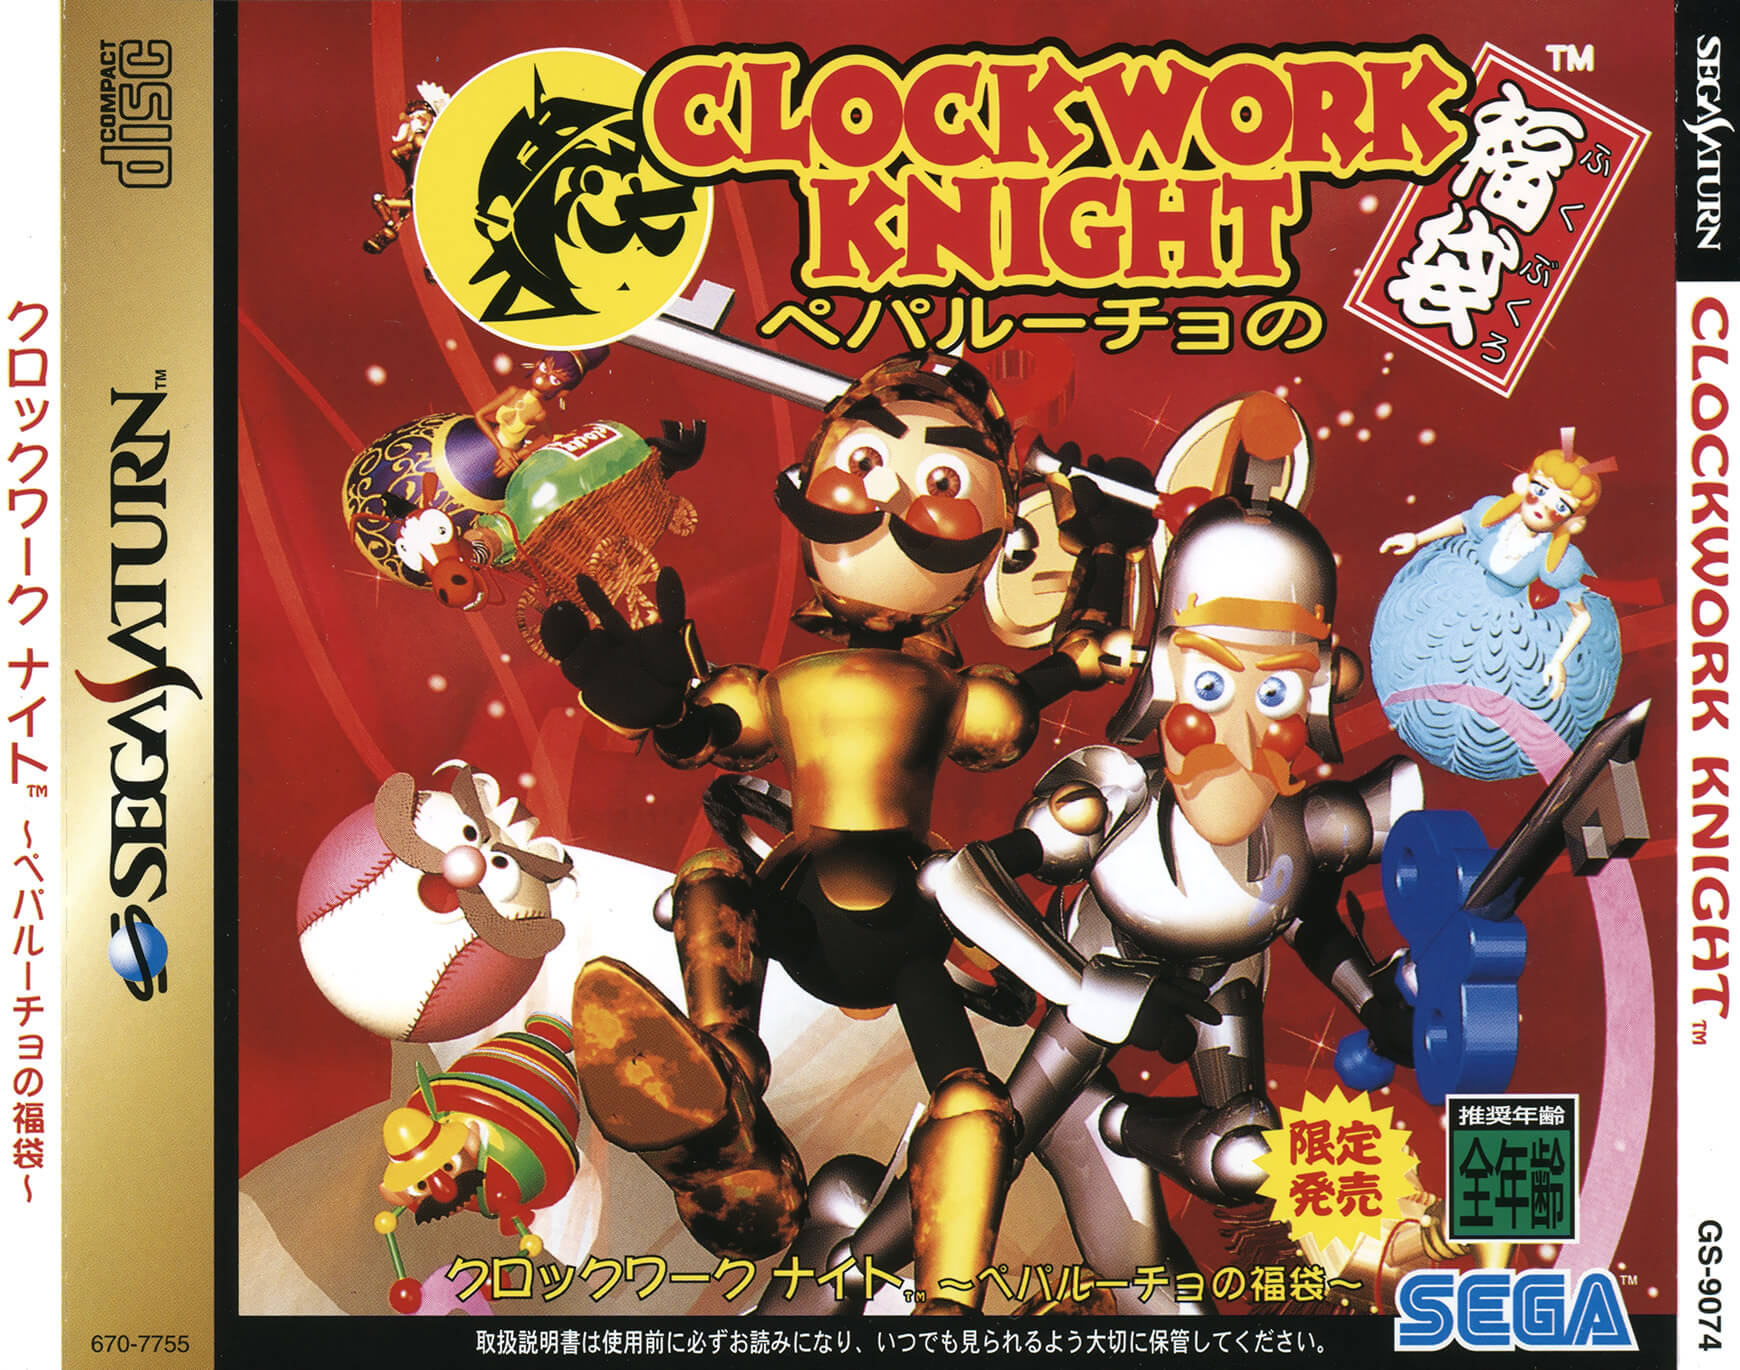 Clockwork Knight: Pepperouchau no Fukubukuro